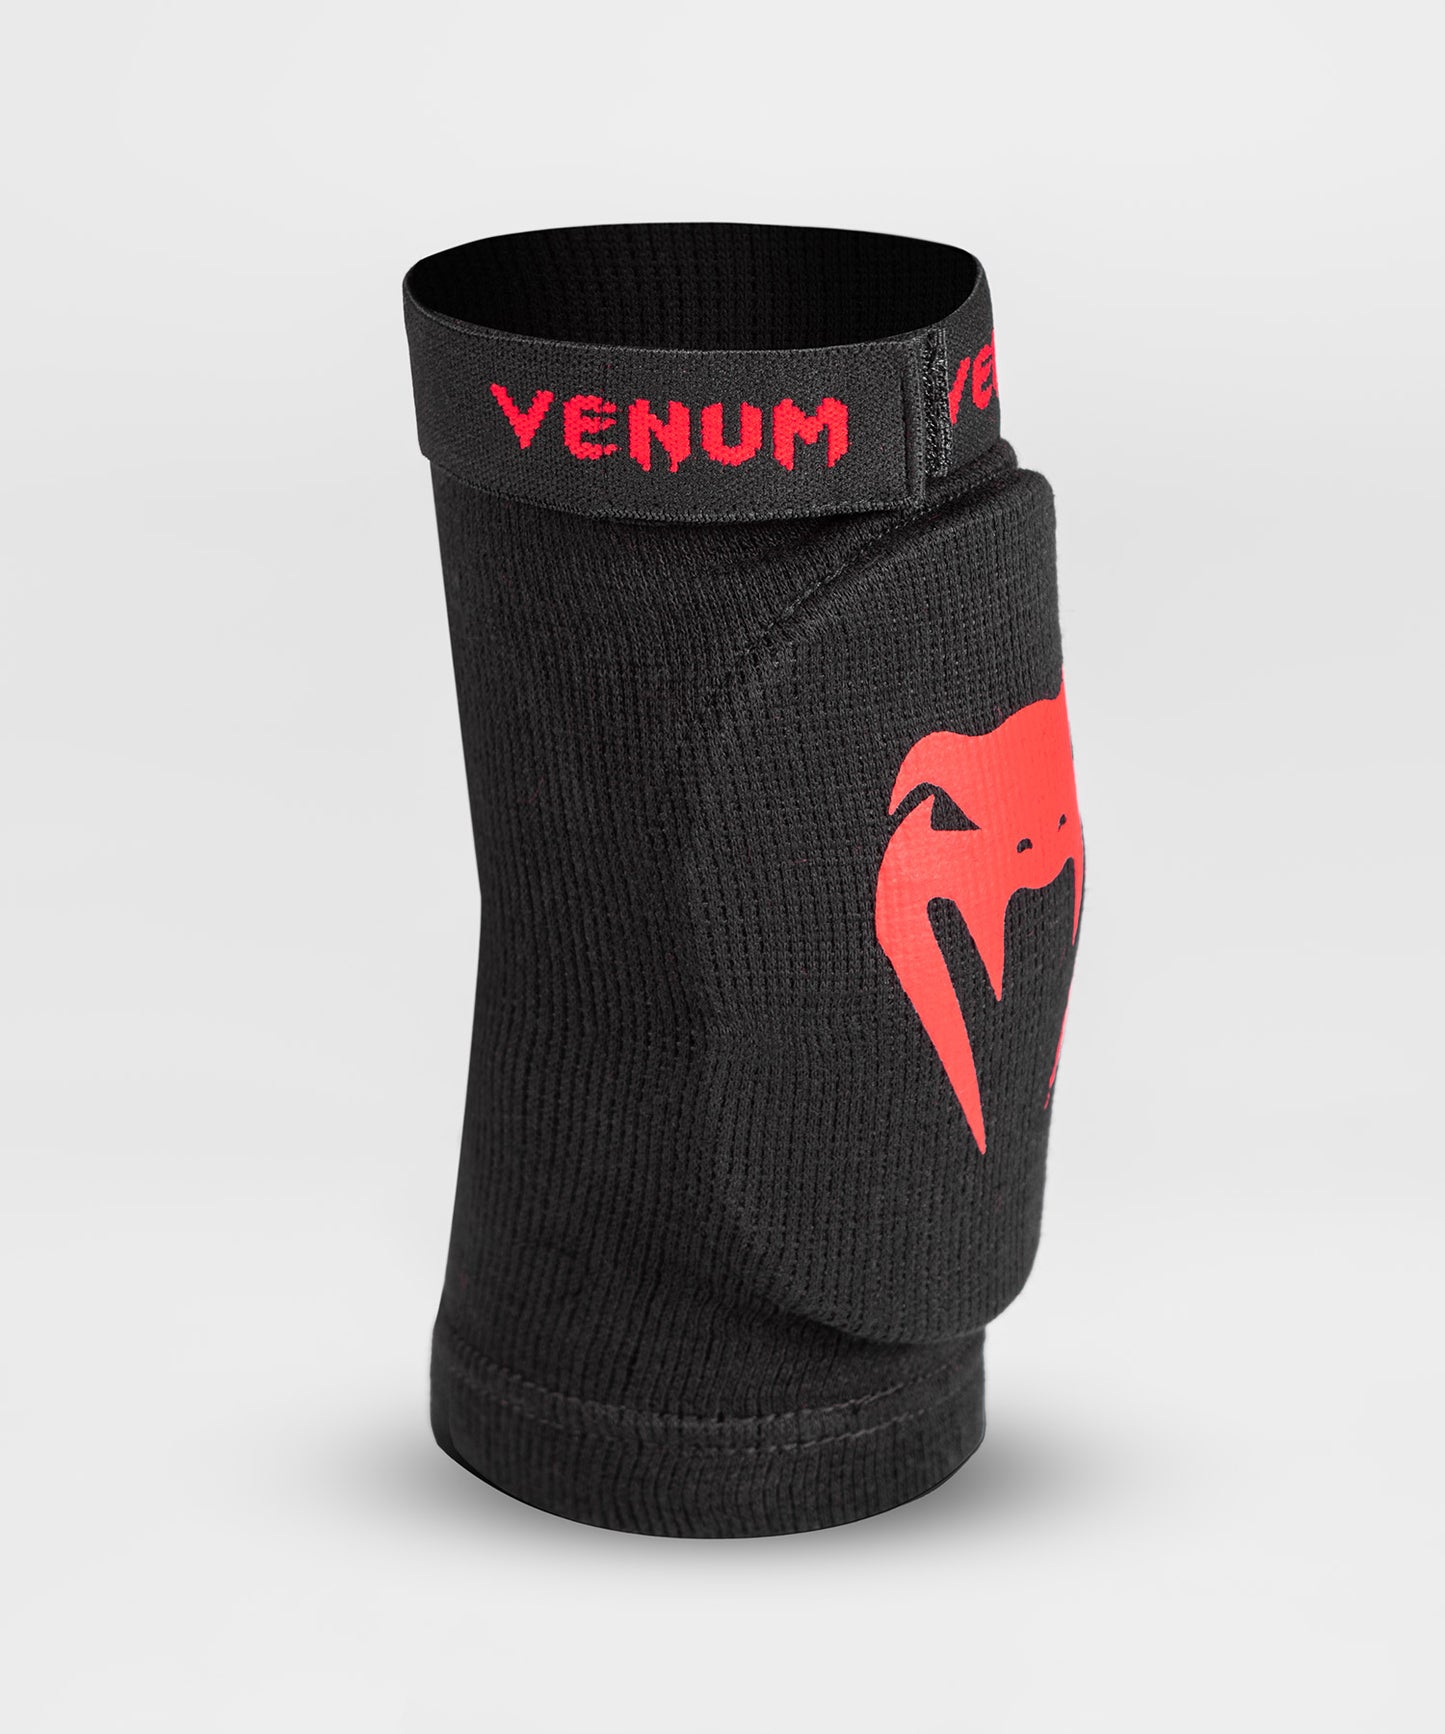 Venum Kontact Elbow Guard - Black/Red